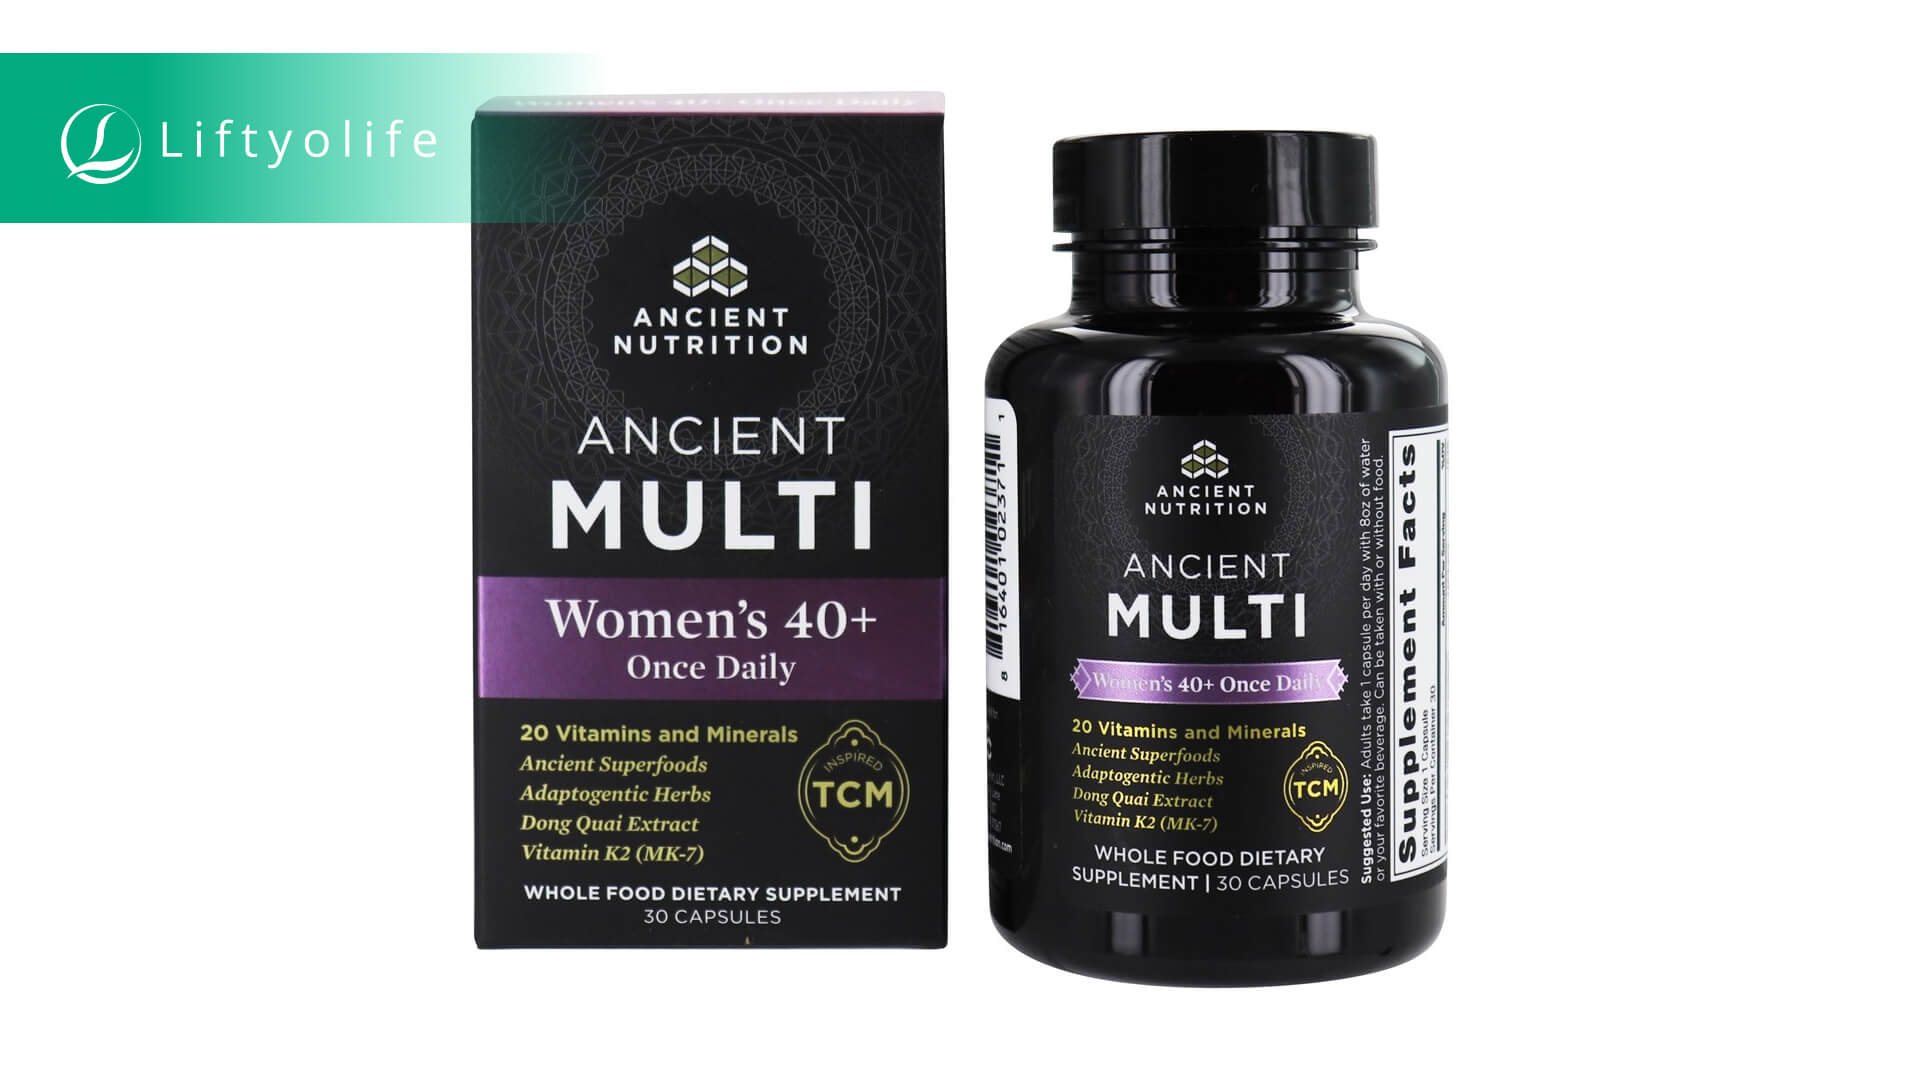 Ancient nutrition multi women’s 40+